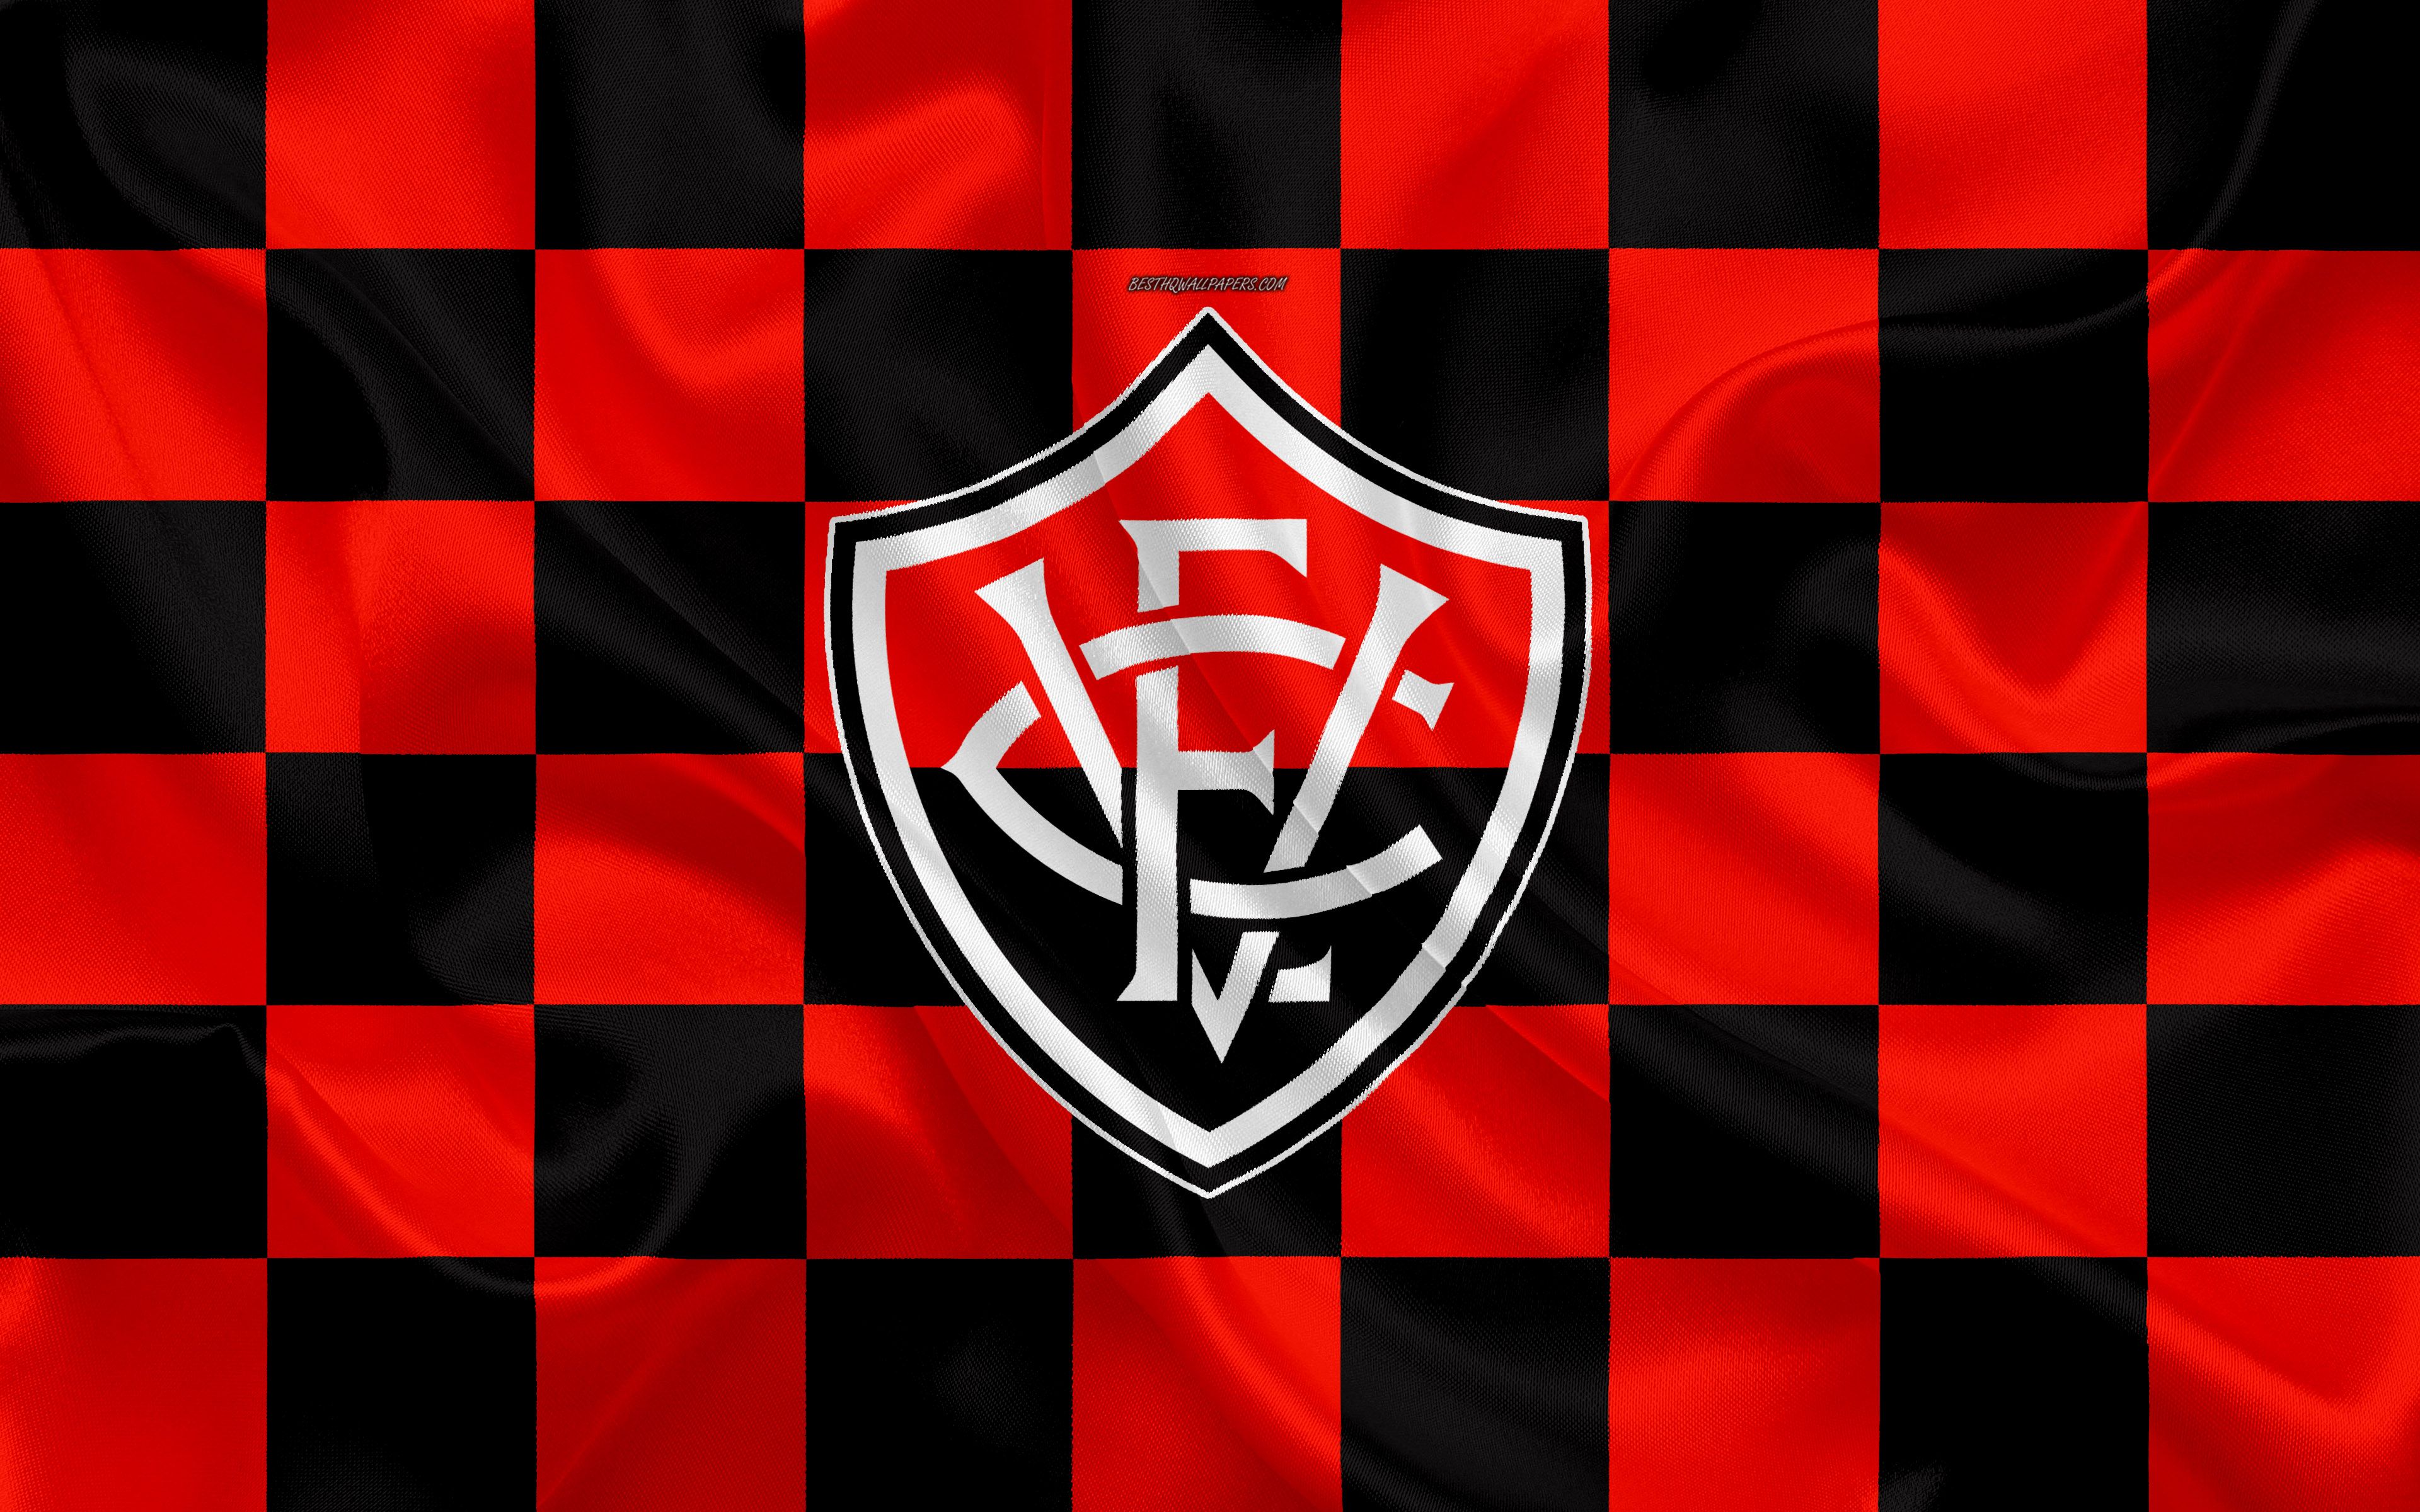 Download wallpaper Esporte Clube Vitoria, 4k, logo, creative art